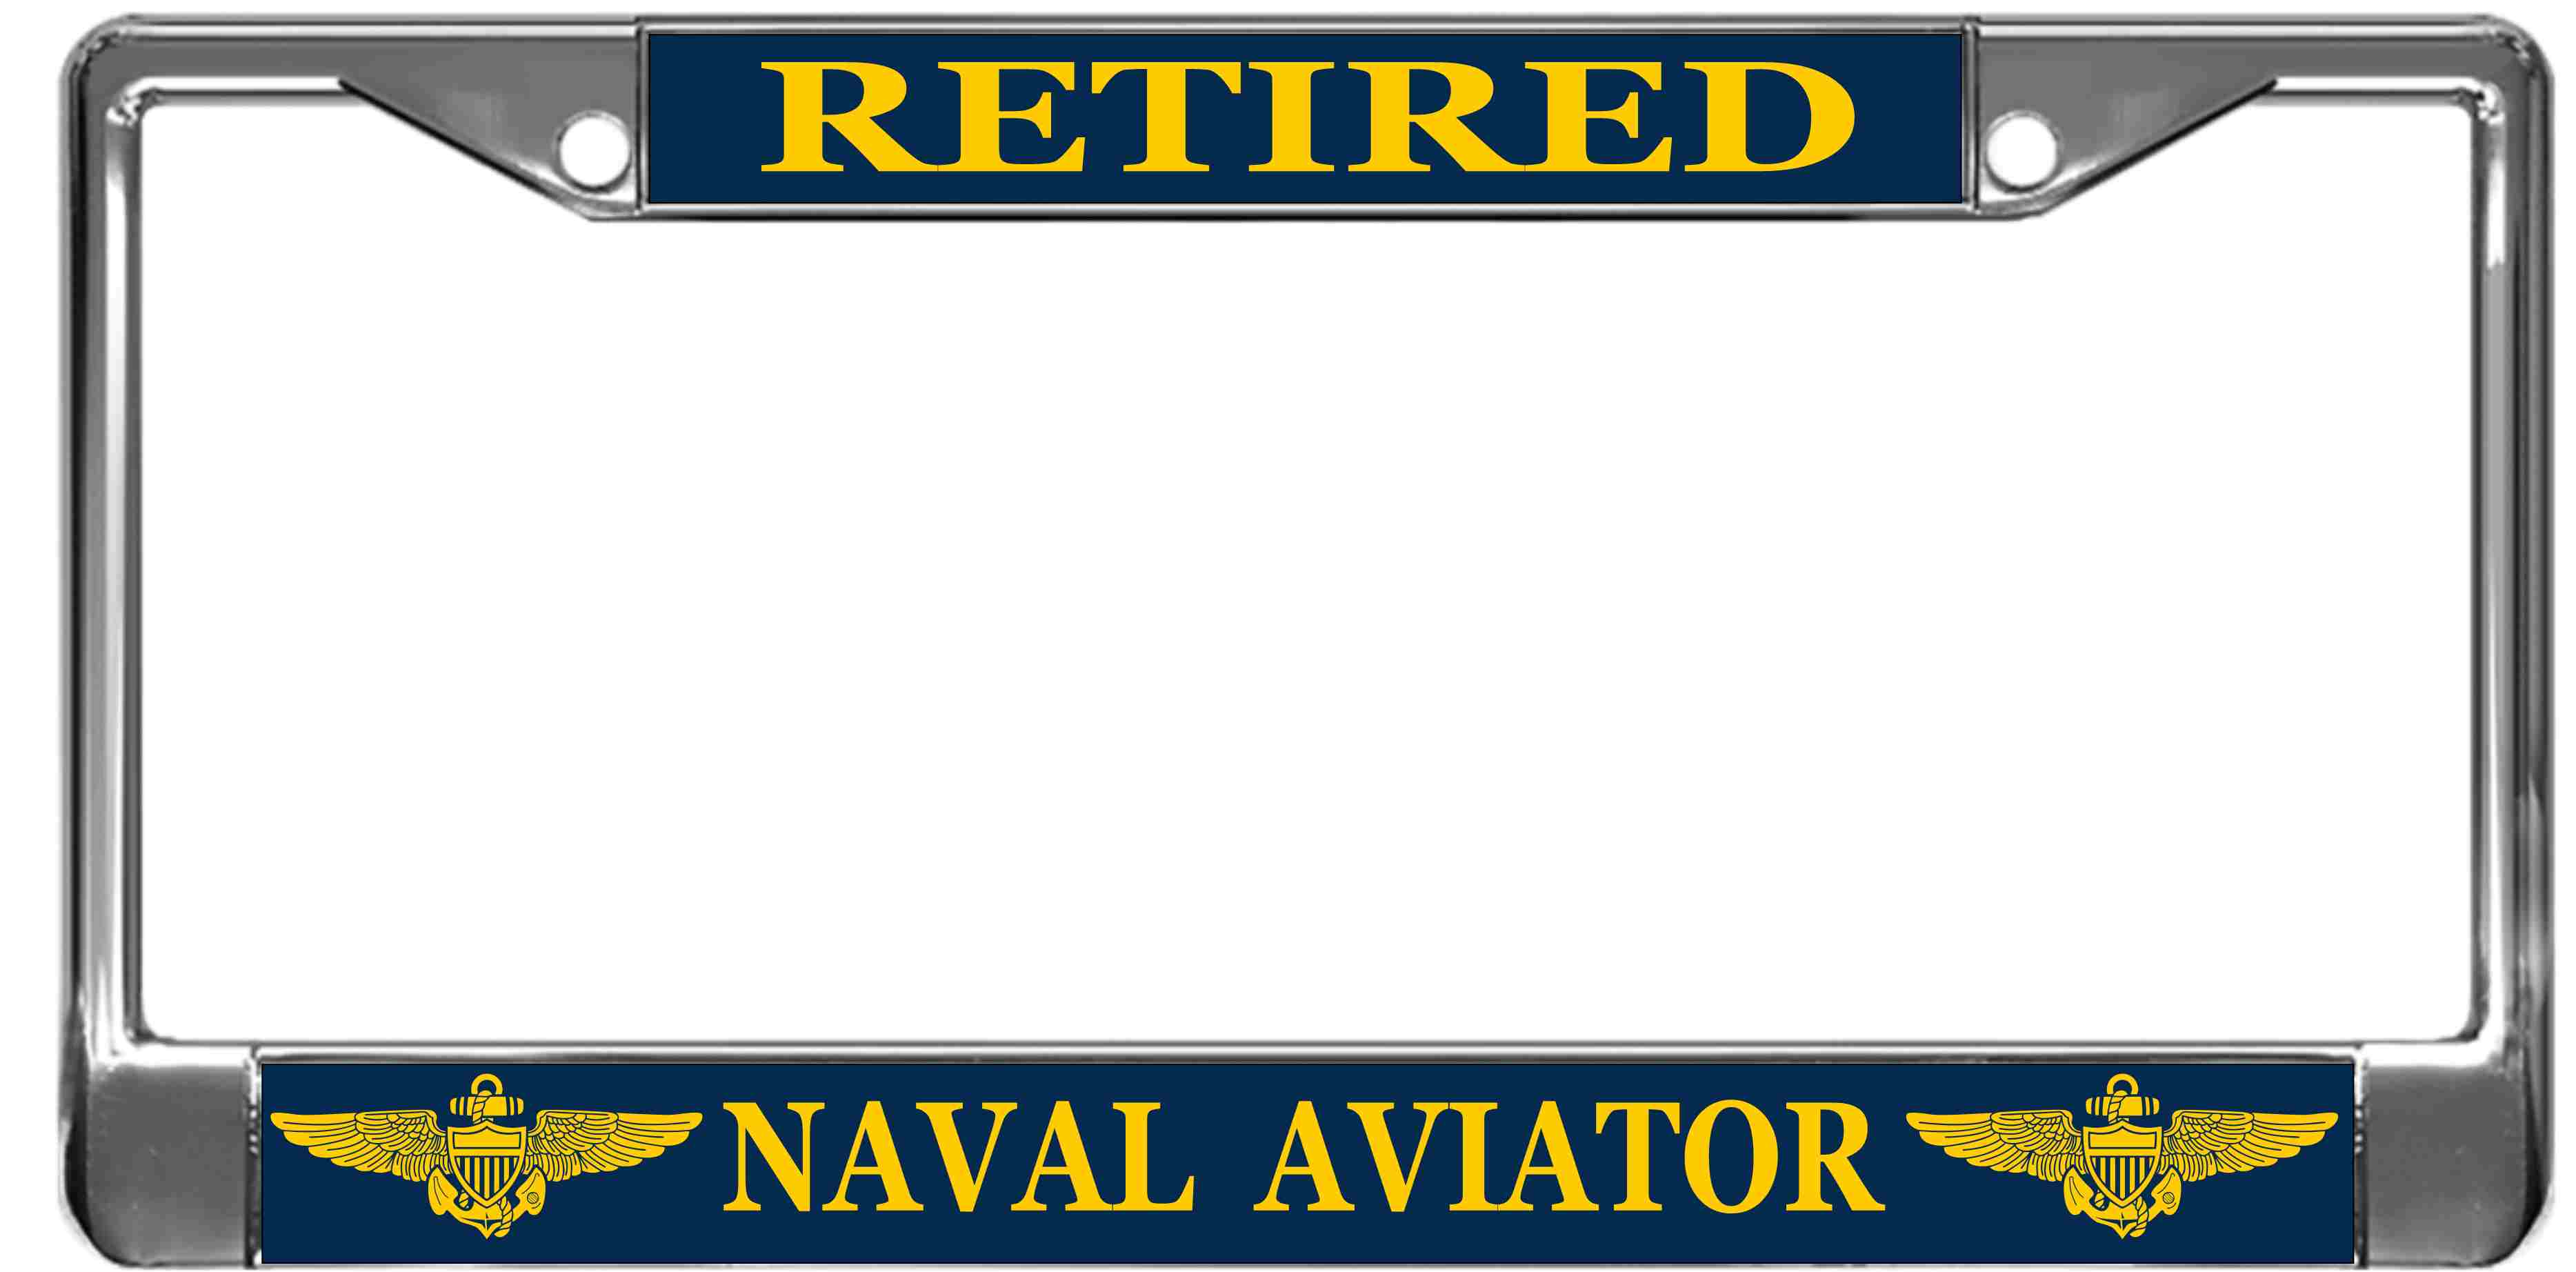 Naval Aviator - metal custom license plate frame